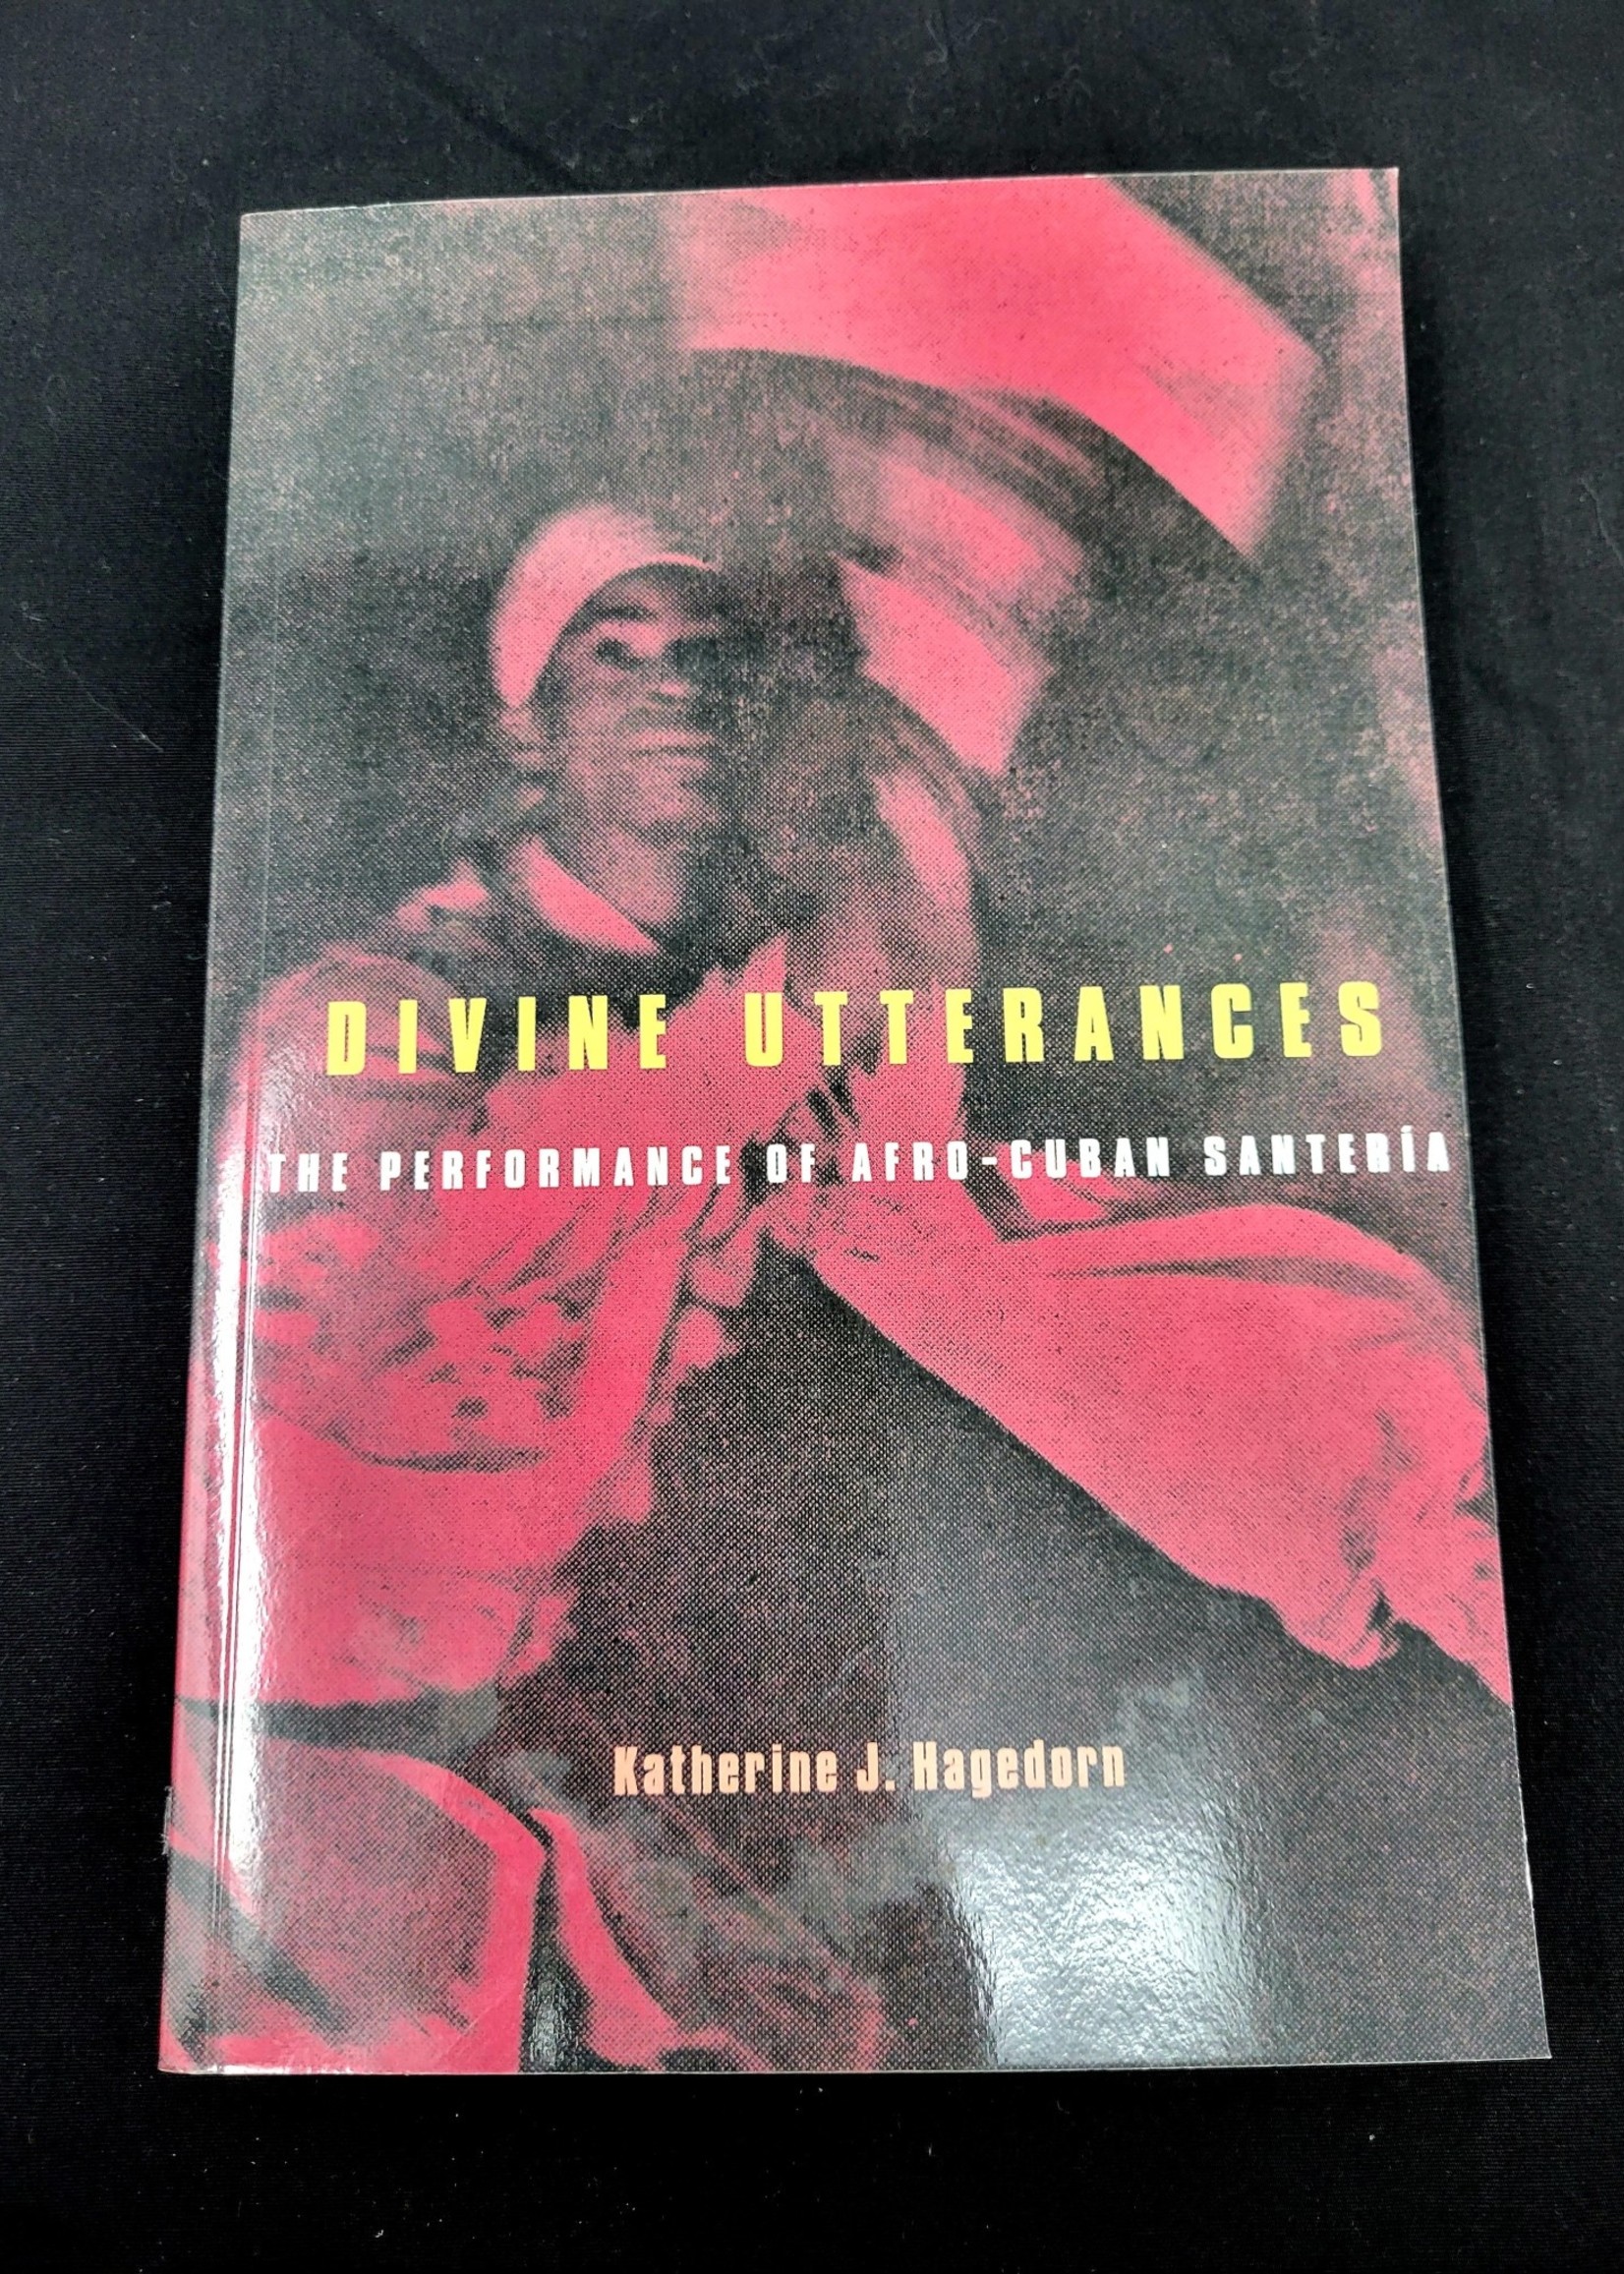 Divine Utterances - The Performance of Afro-Cuban Santeria - Katherine J. Hagedorn